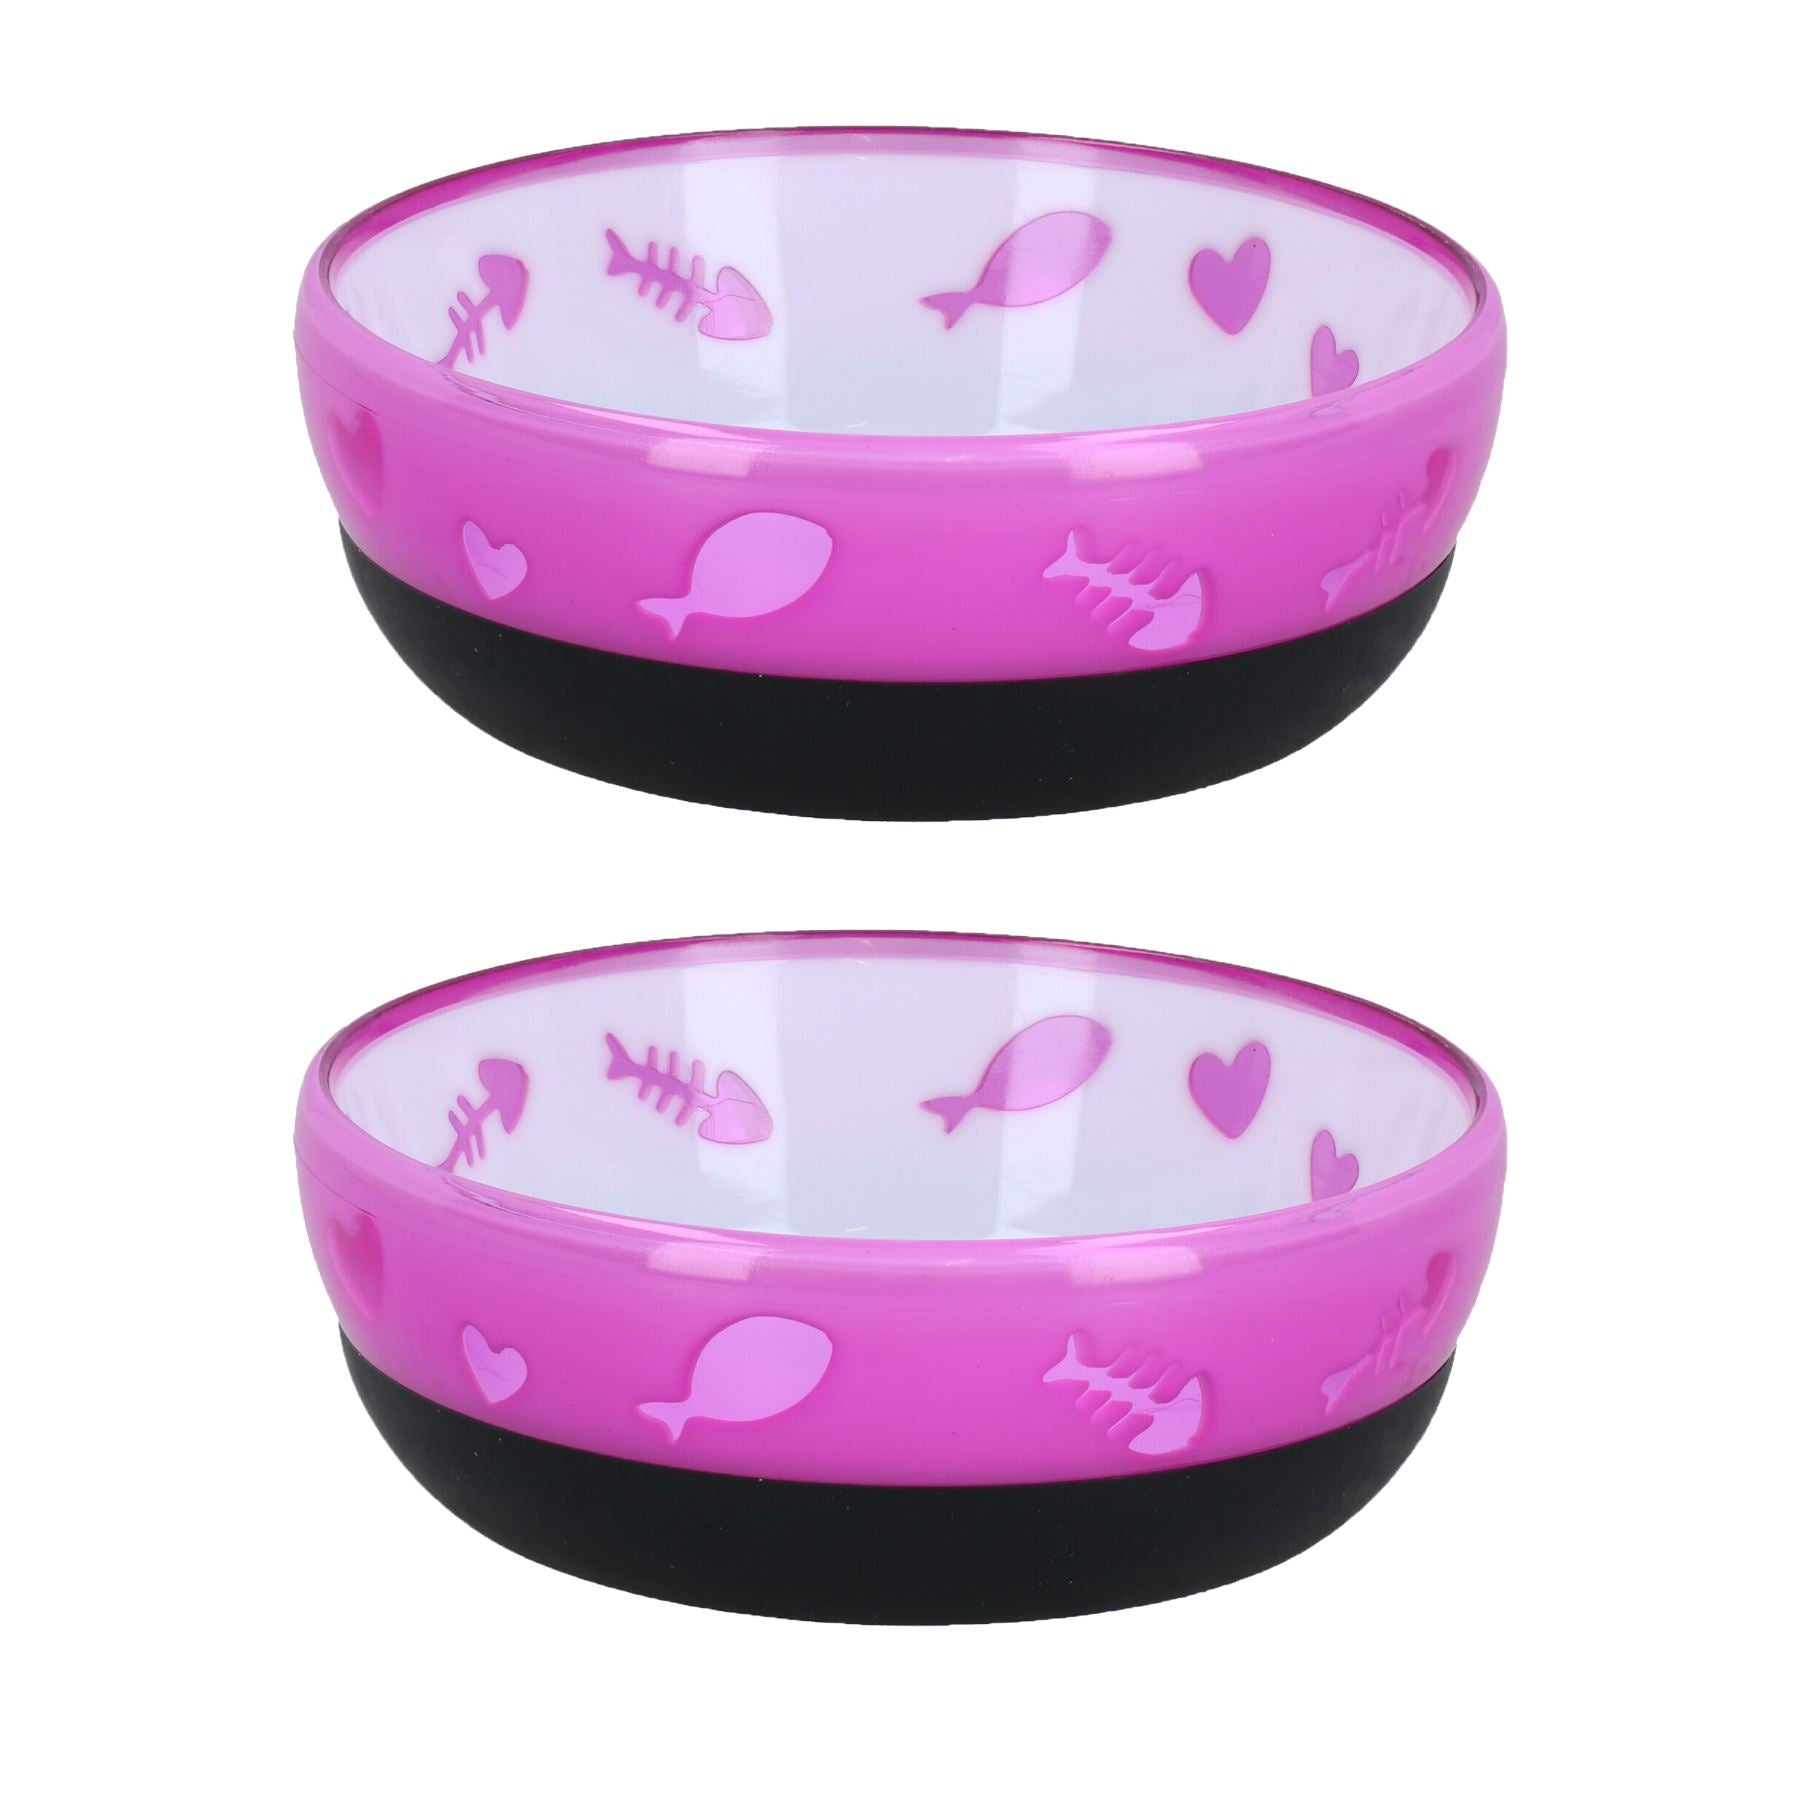 Small purple anti-slip purrfectly cat pet dish bowl gift Size:11cm/250ml capacity